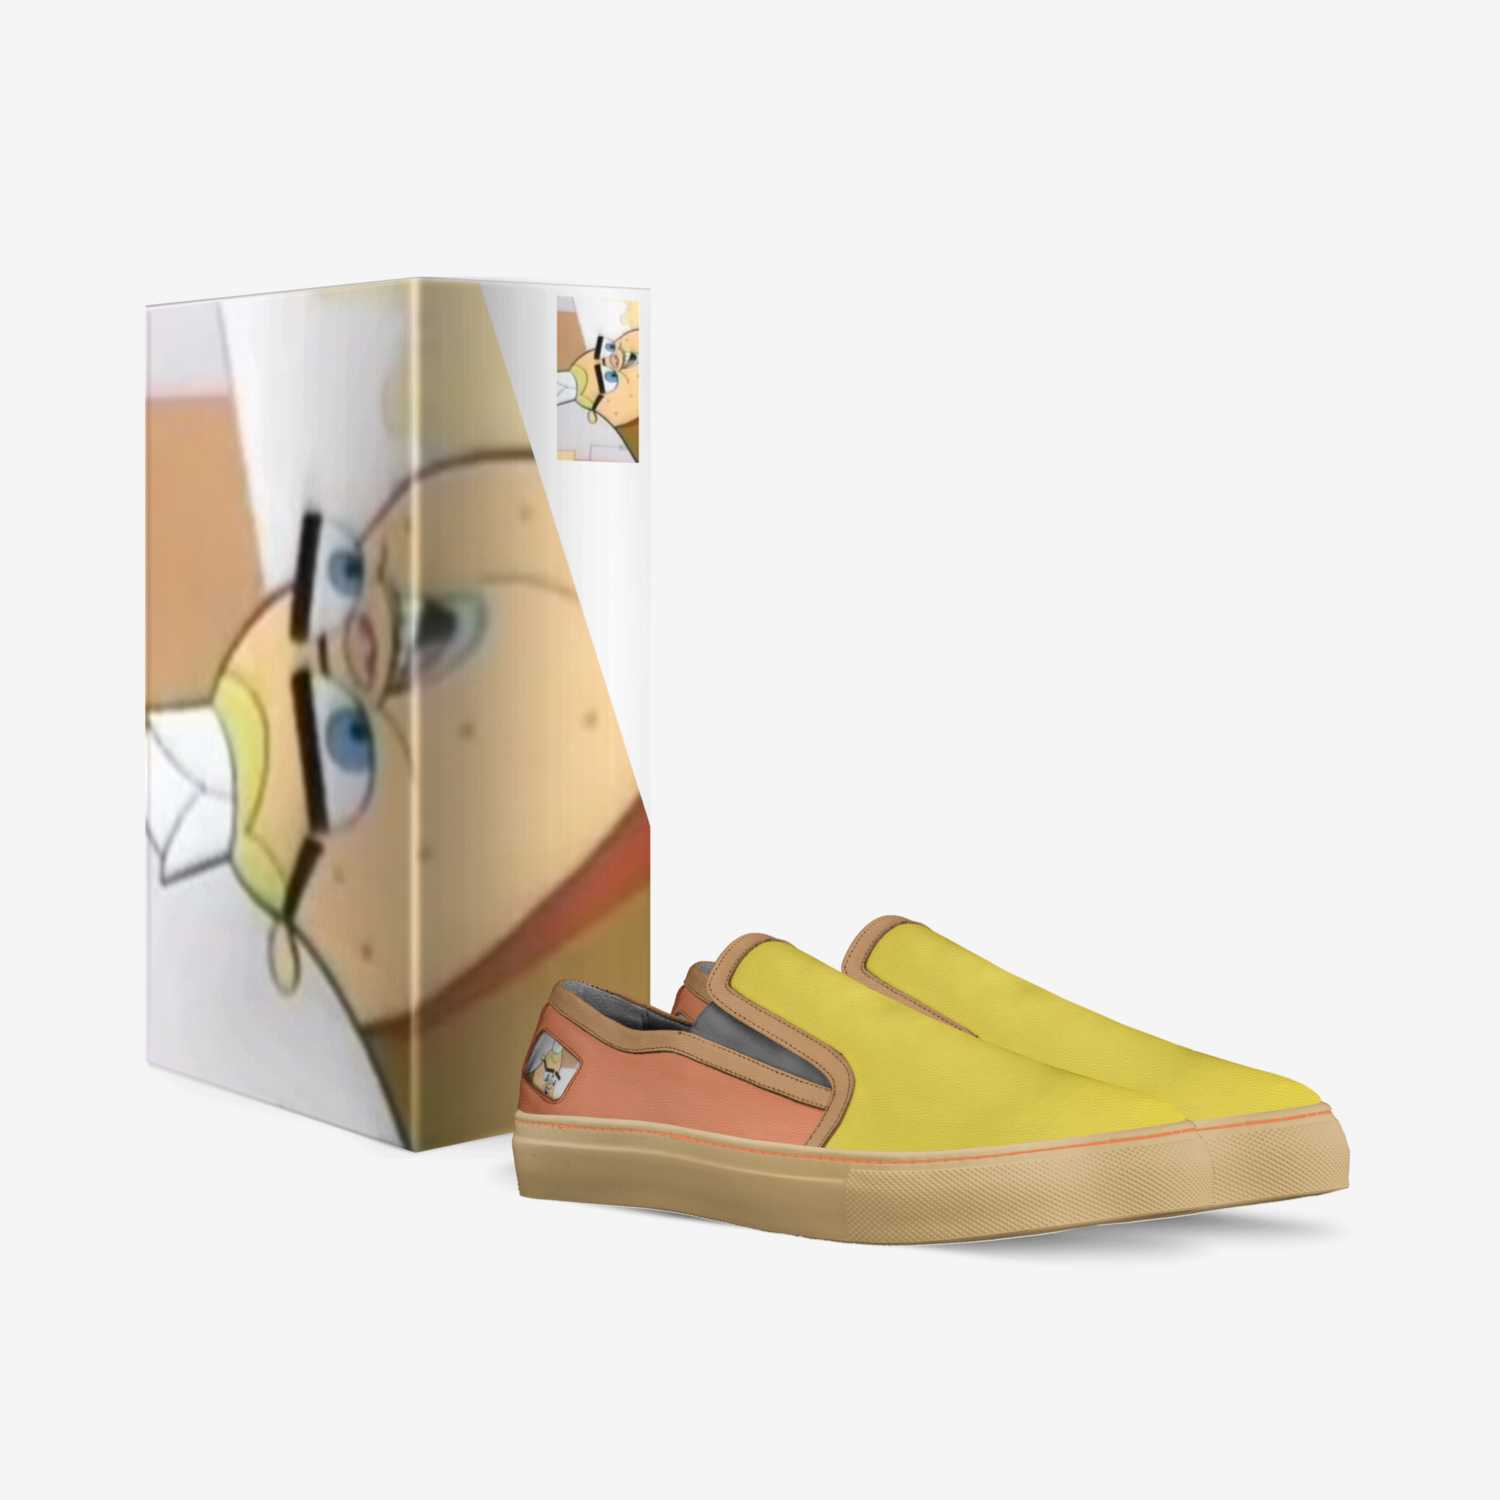 Joe custom made in Italy shoes by Hank Nemetz | Box view